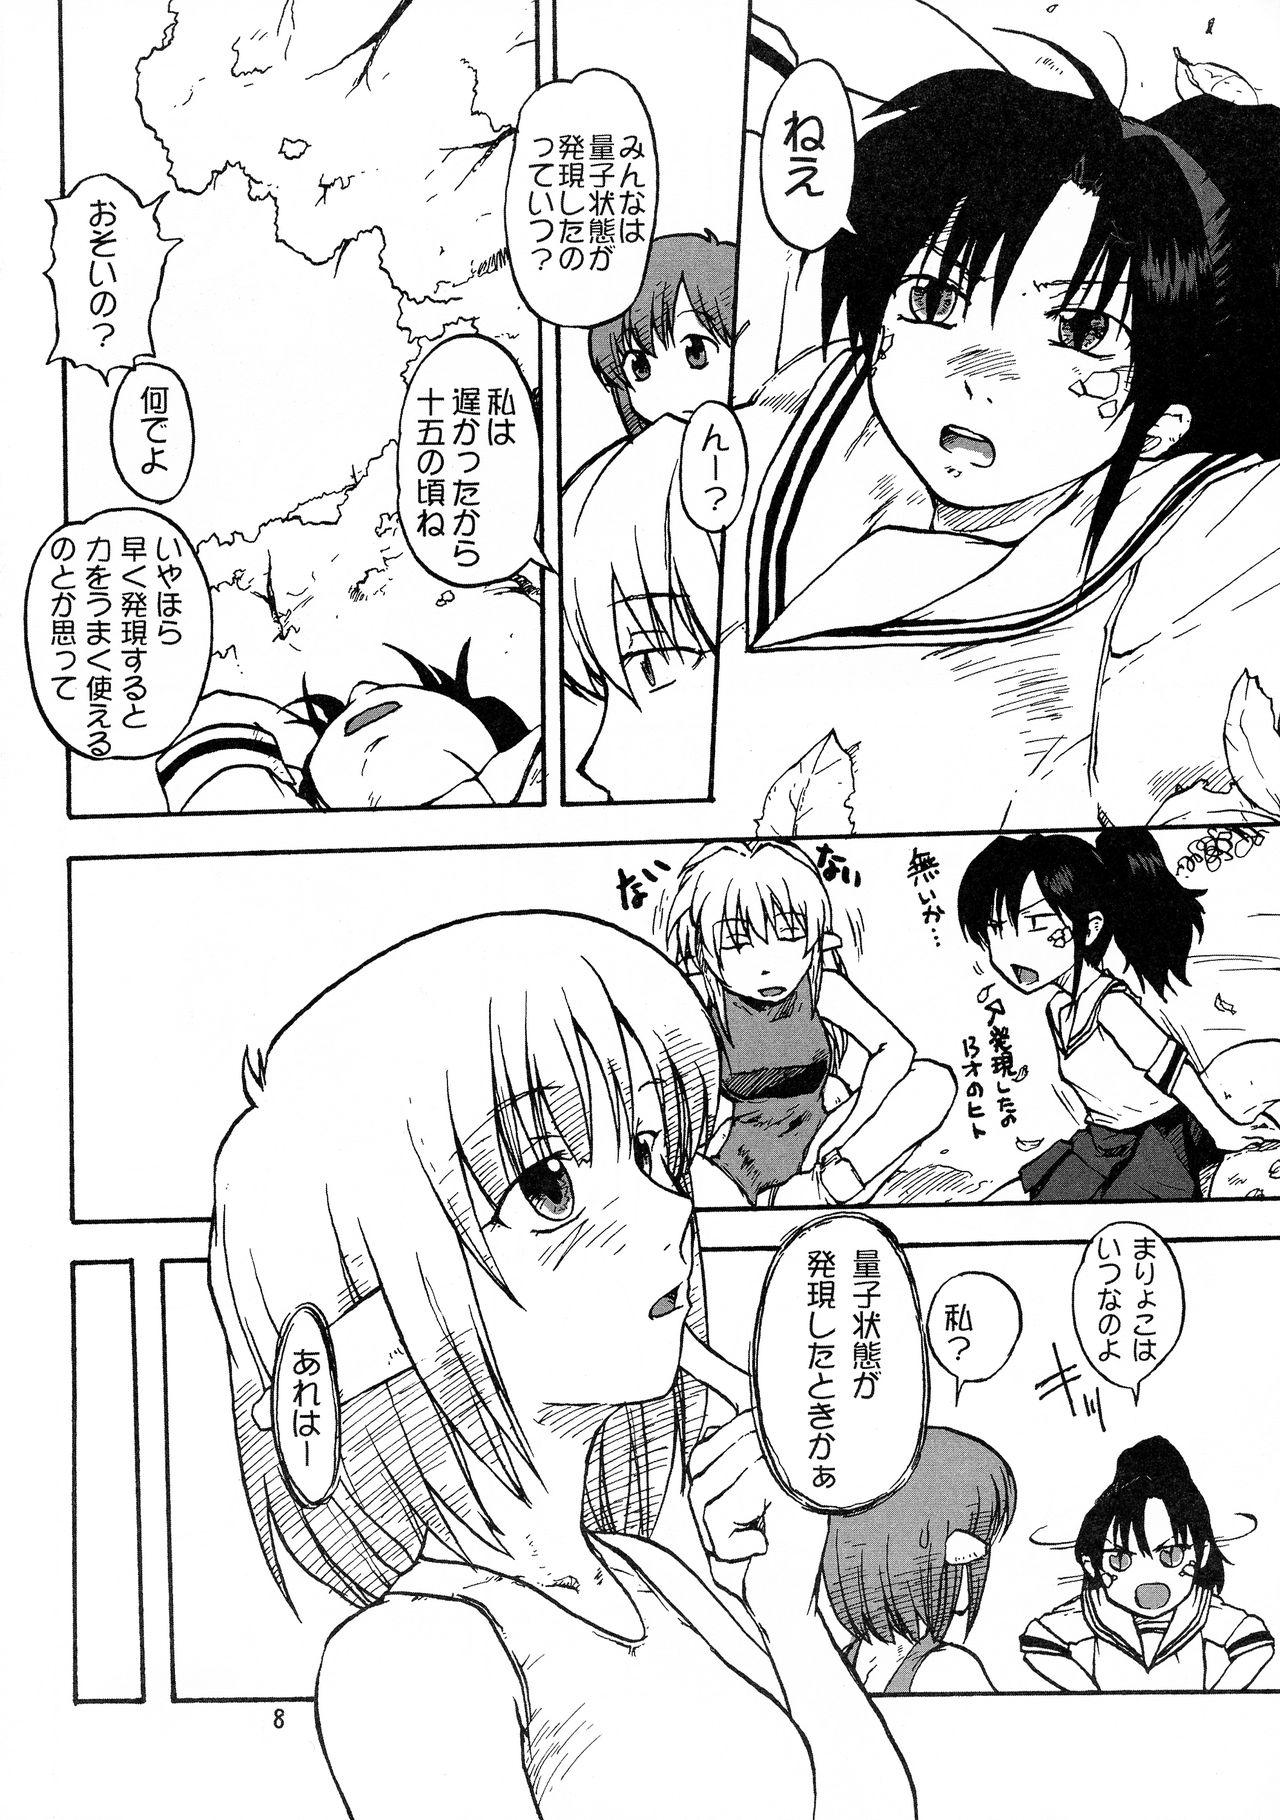 Manga Chocolate Bustier vol. 2 7